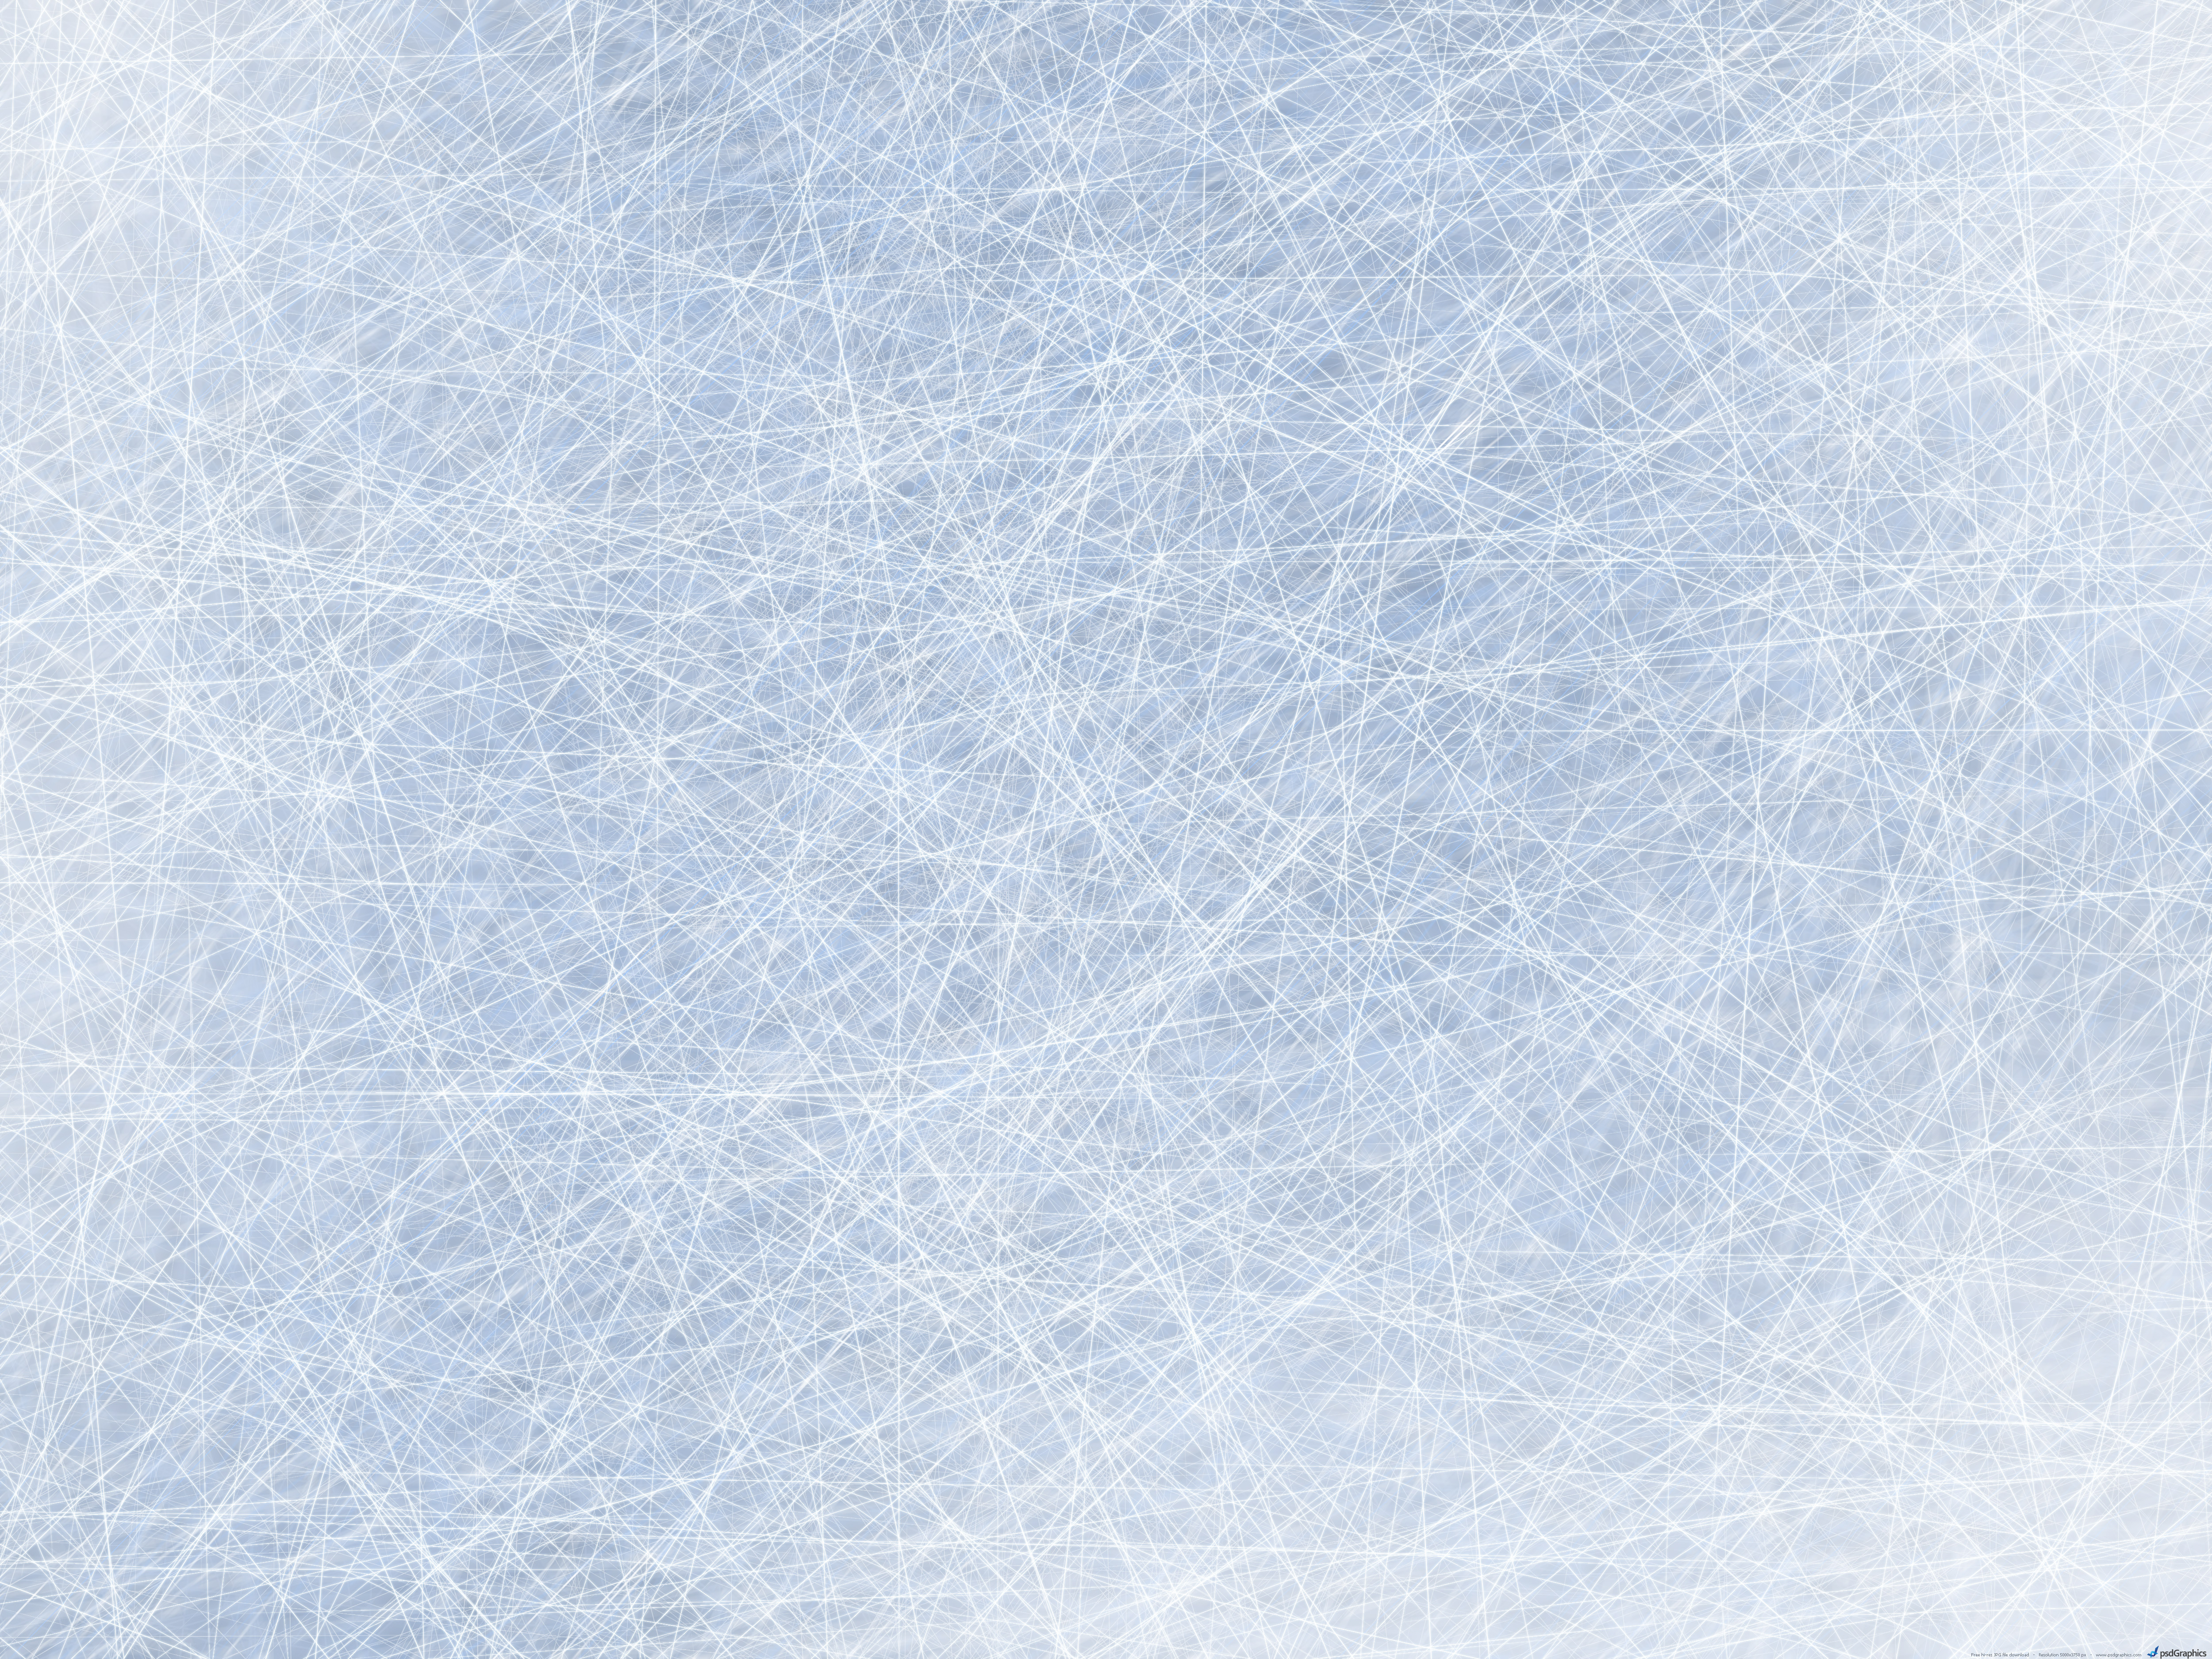 Ice Wallpaper